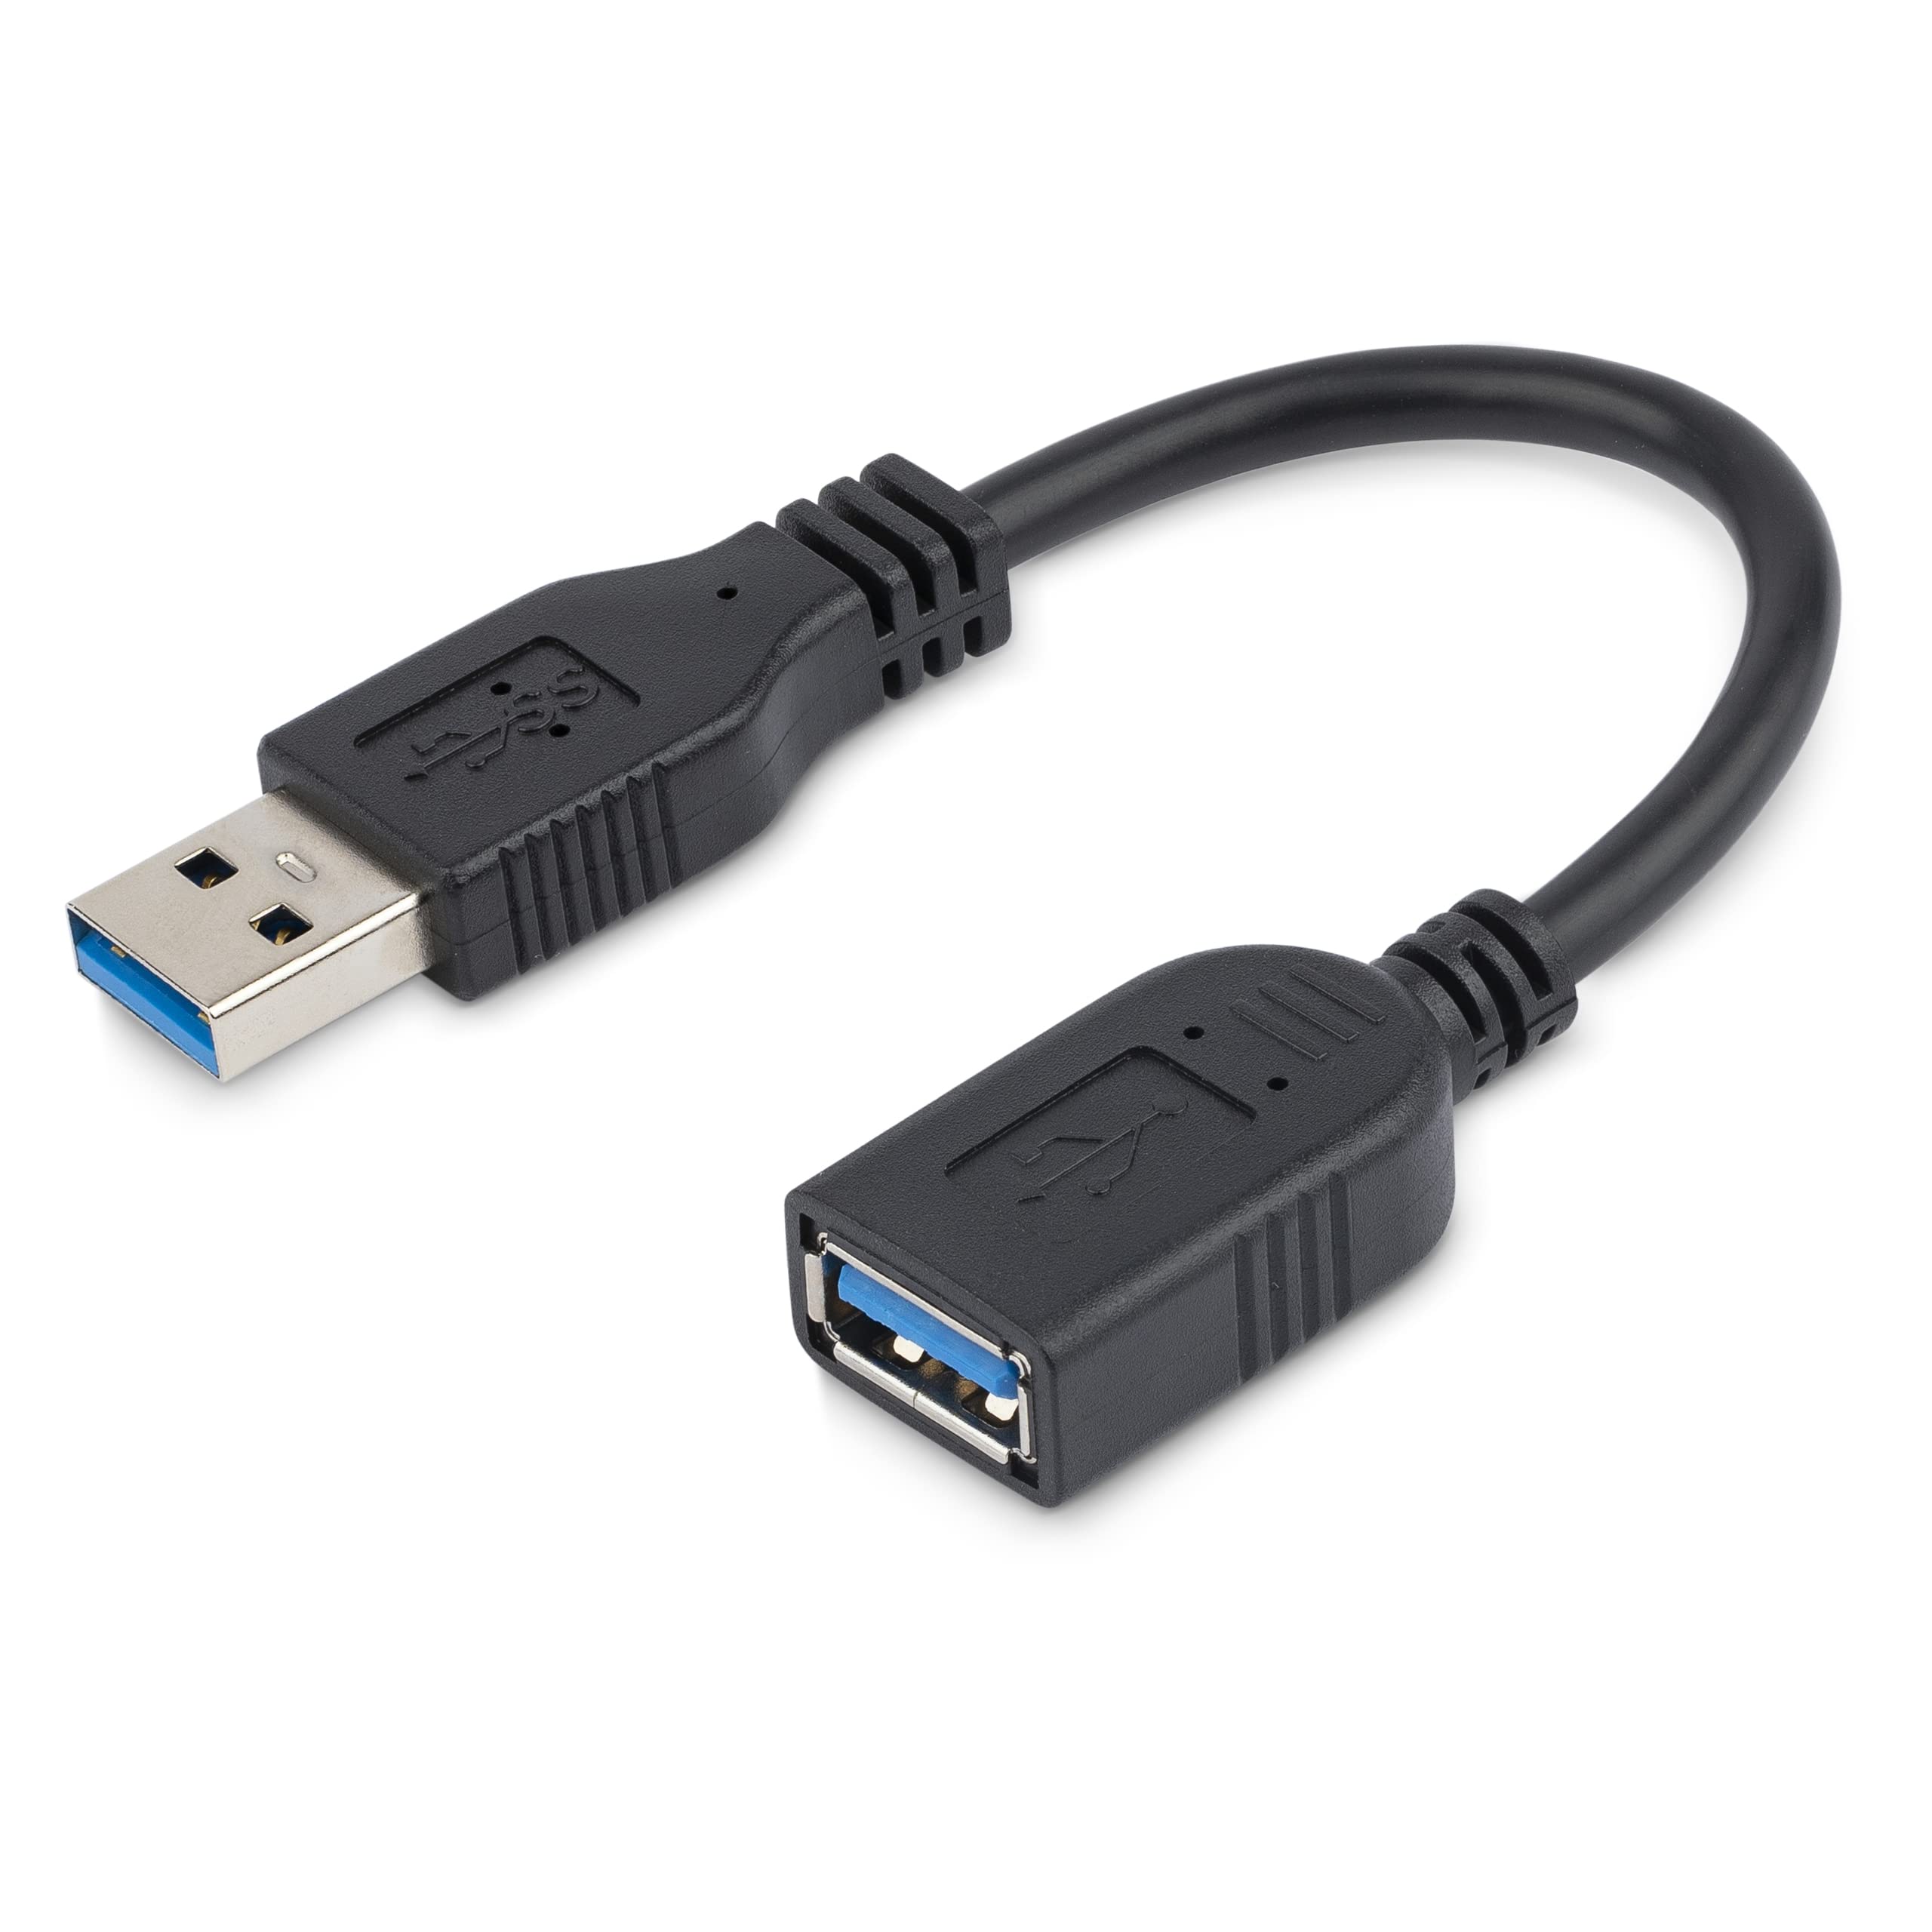 USB connection port